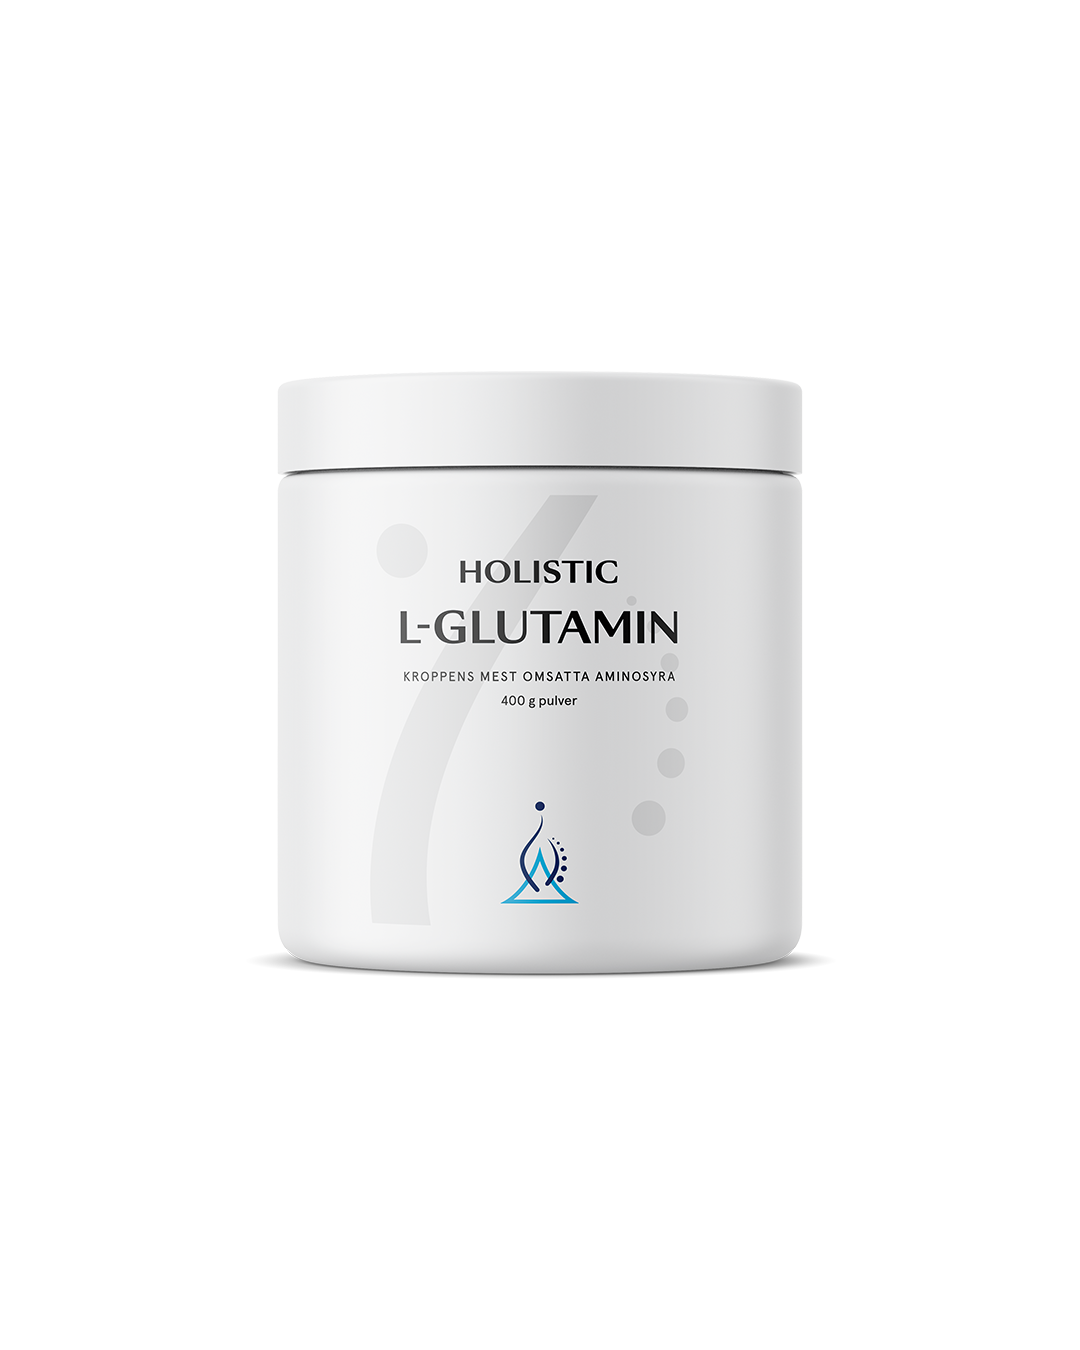 Holistic L-glutamin, 400 g